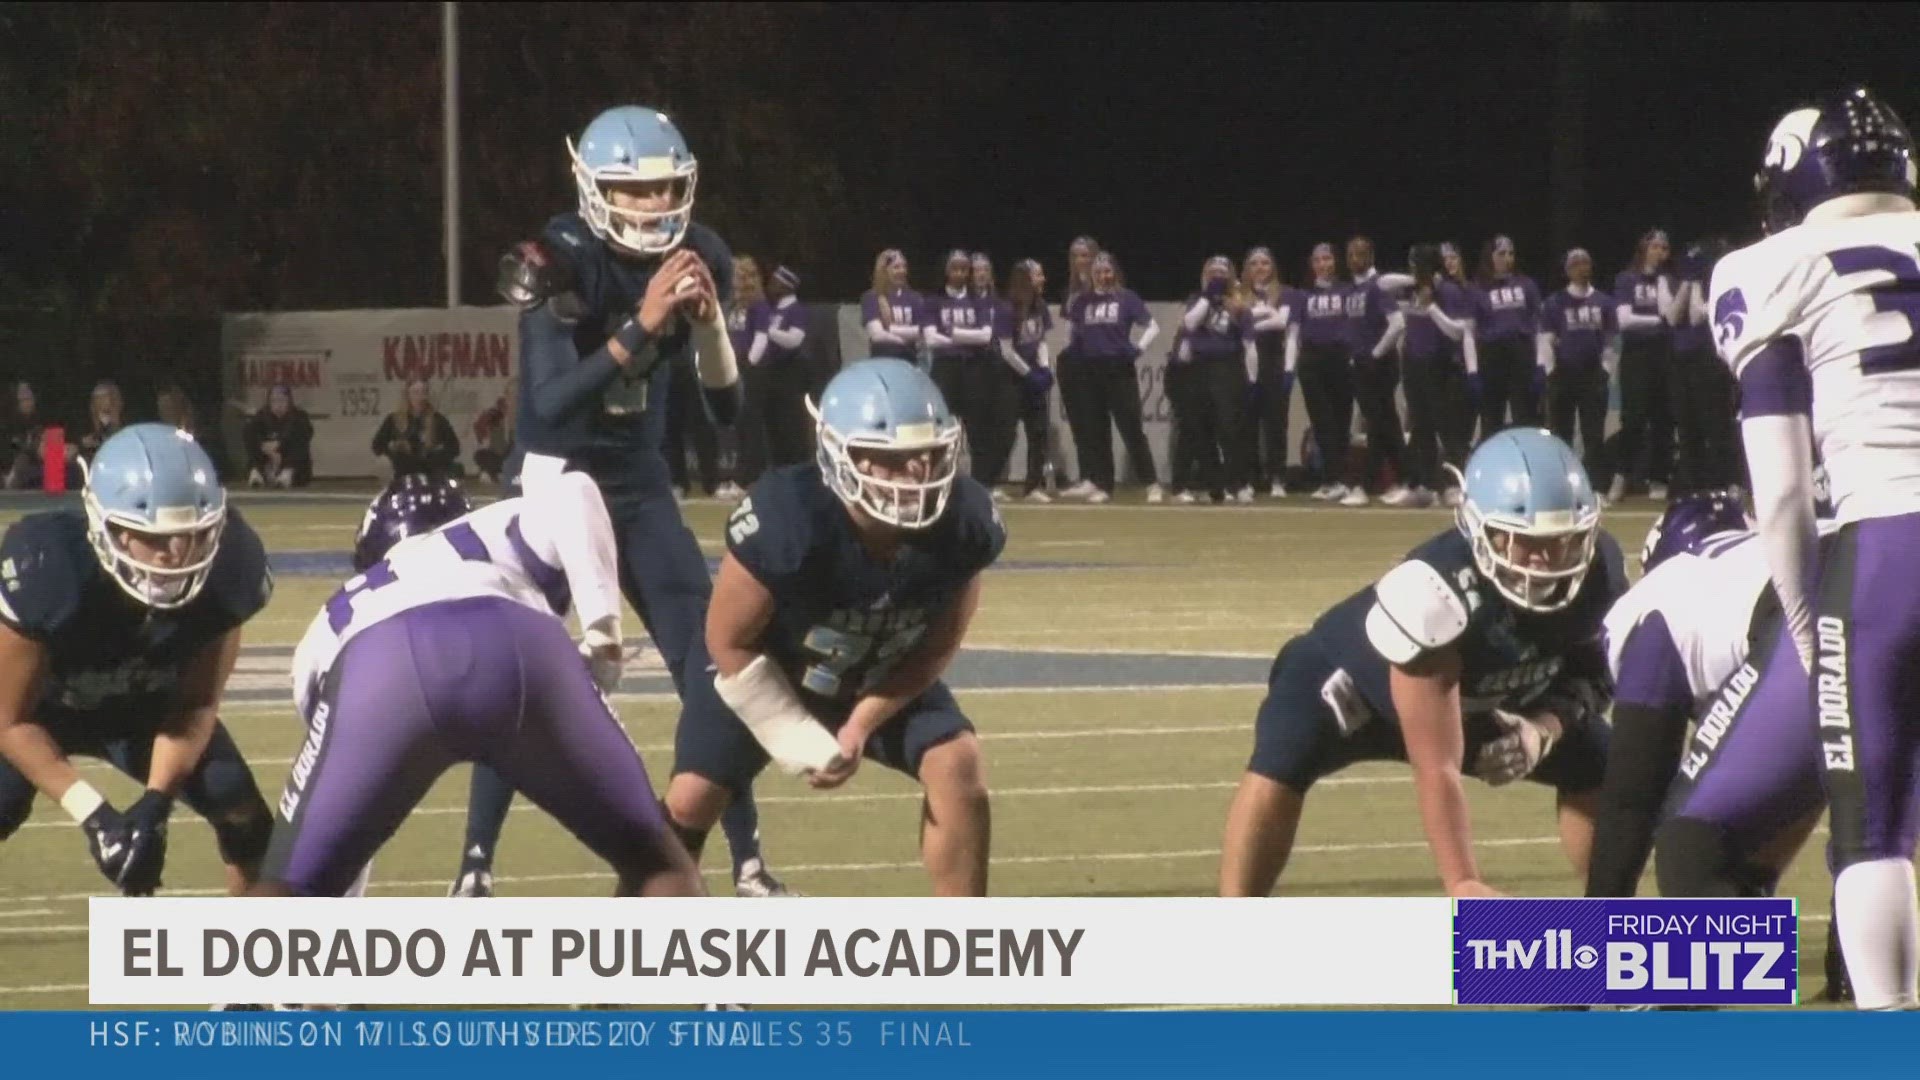 Pulaski Academy will take on Marion next week